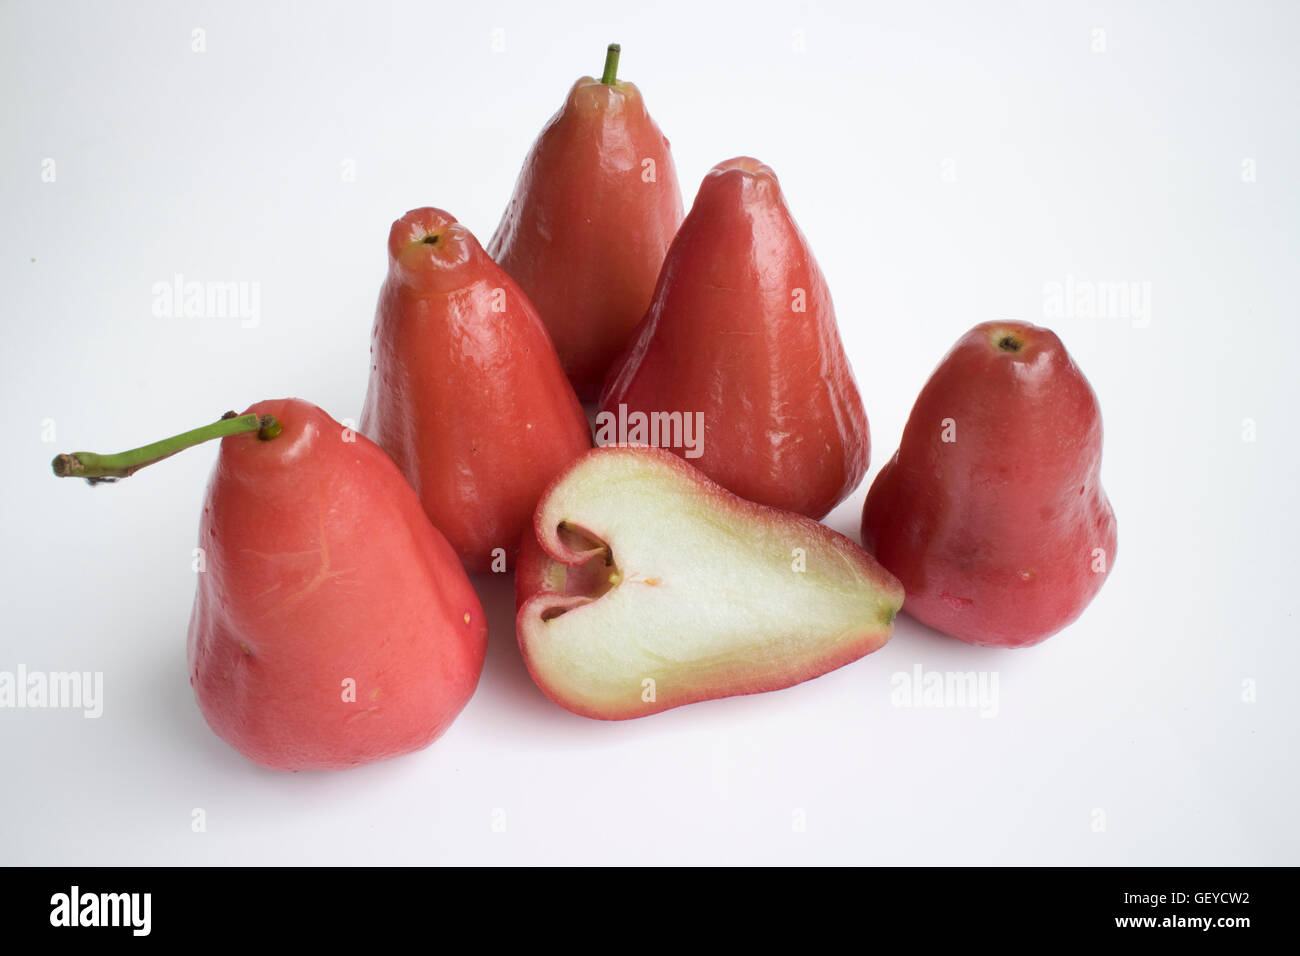 Rose apple isolated on the white background Stock Photo